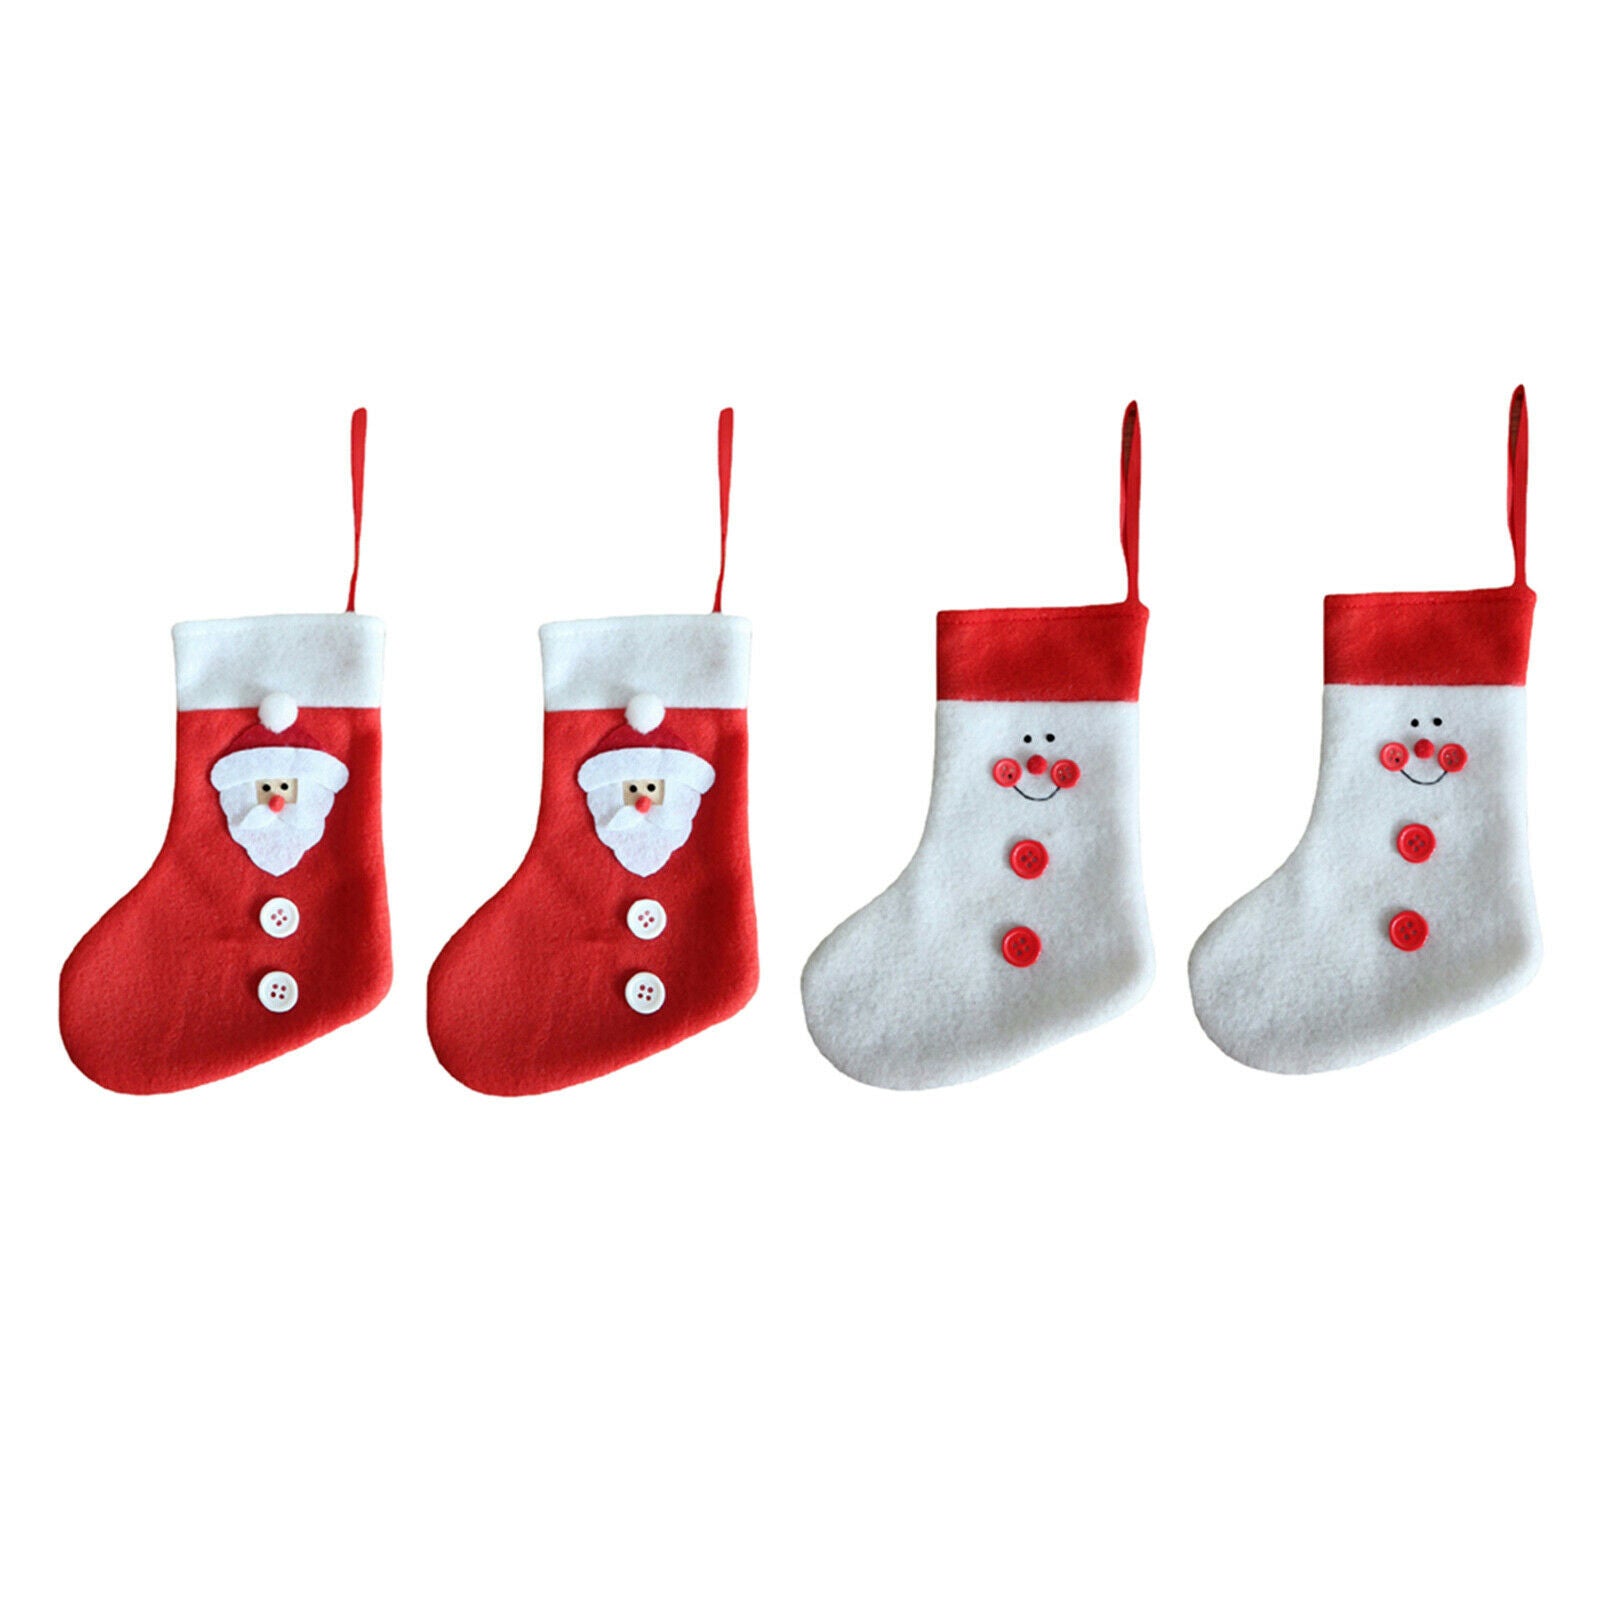 4PCS Classic Red and White Felt Christmas Stockings Xmas Hanging Decoration